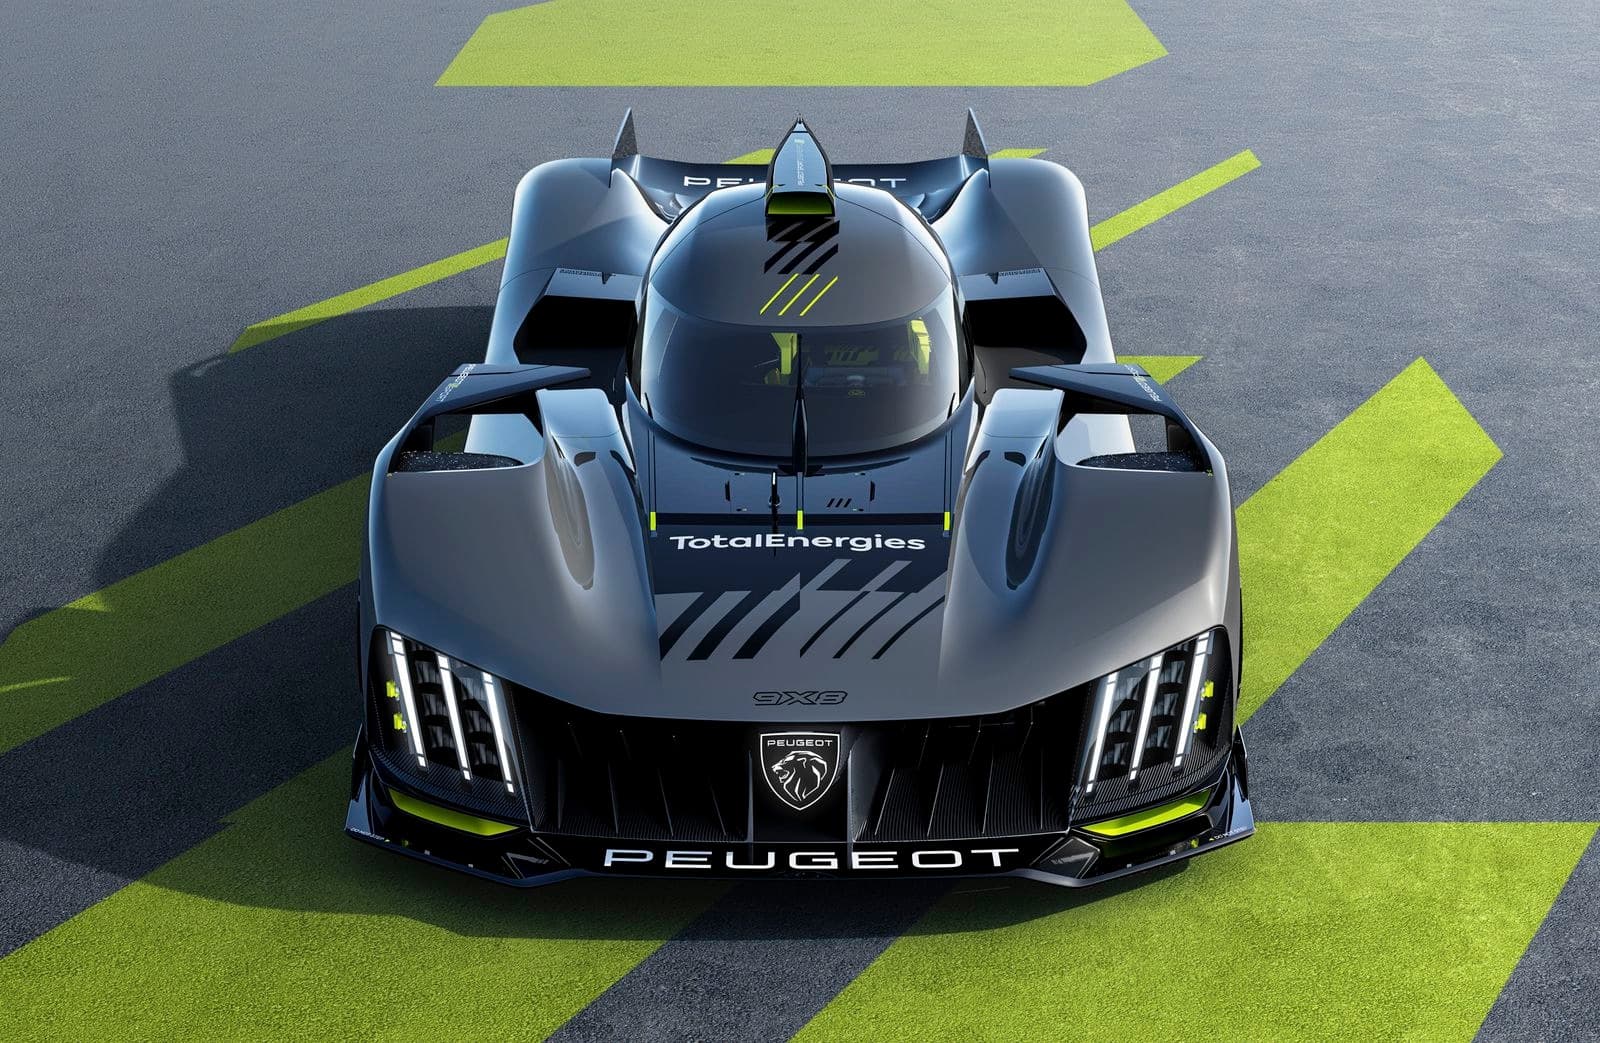 Peugeot arka kanatsız hiper yarış otomobili 9X8'i tanıttı